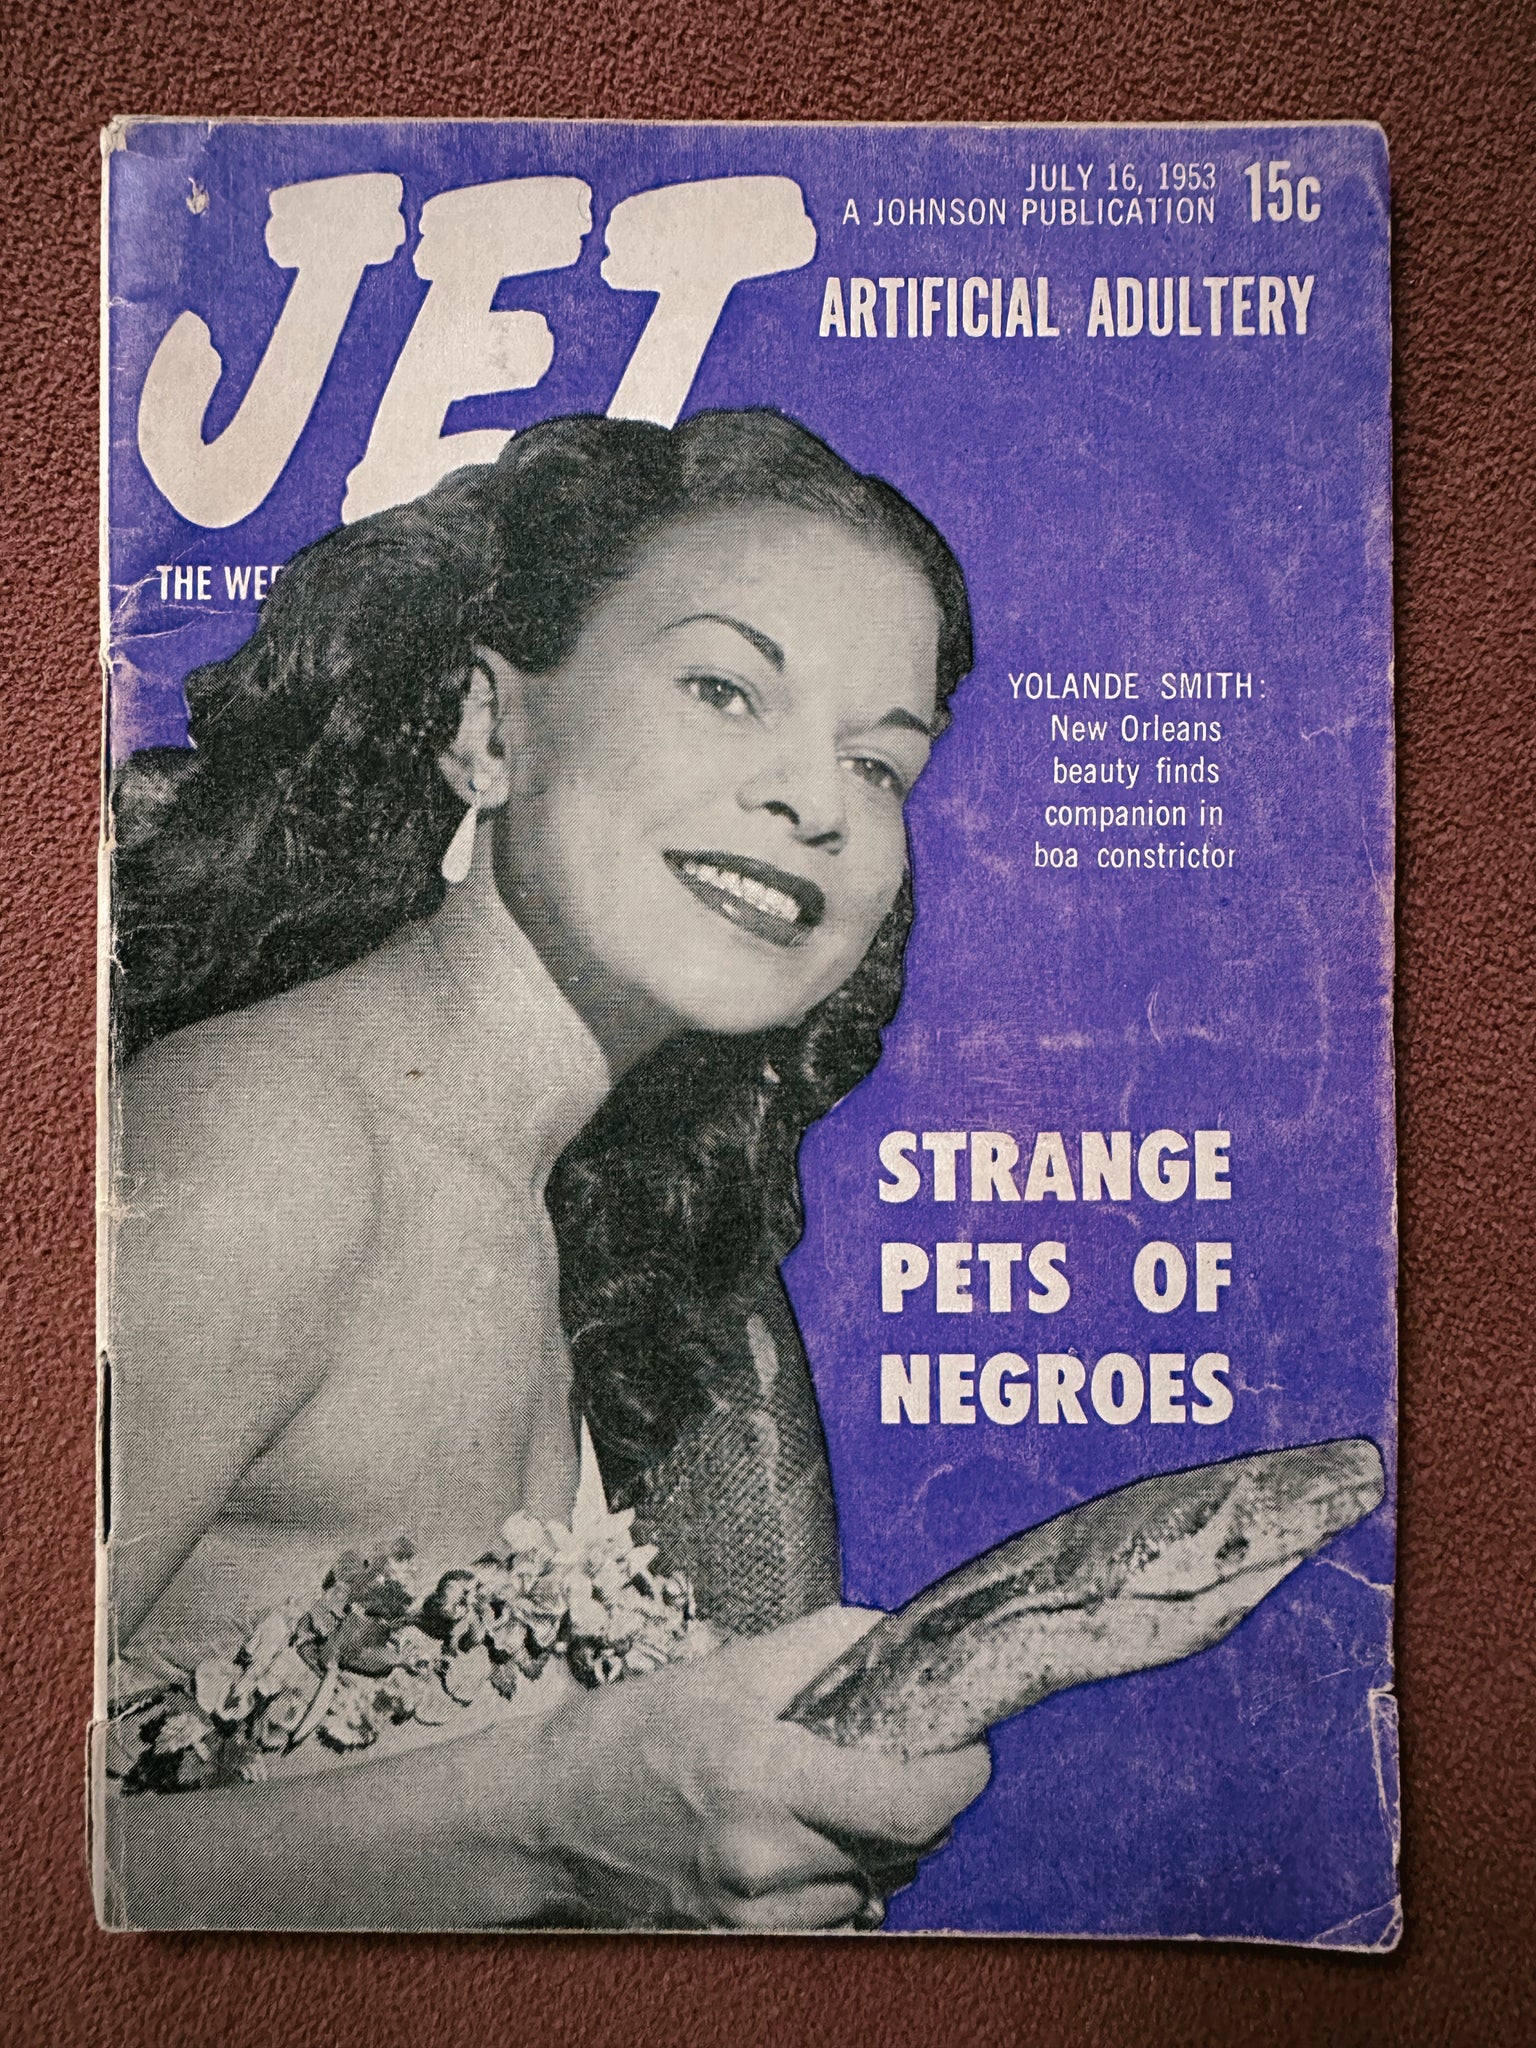 Vintage Jet Magazine // "Strange Pets of Negroes" (July 1953)